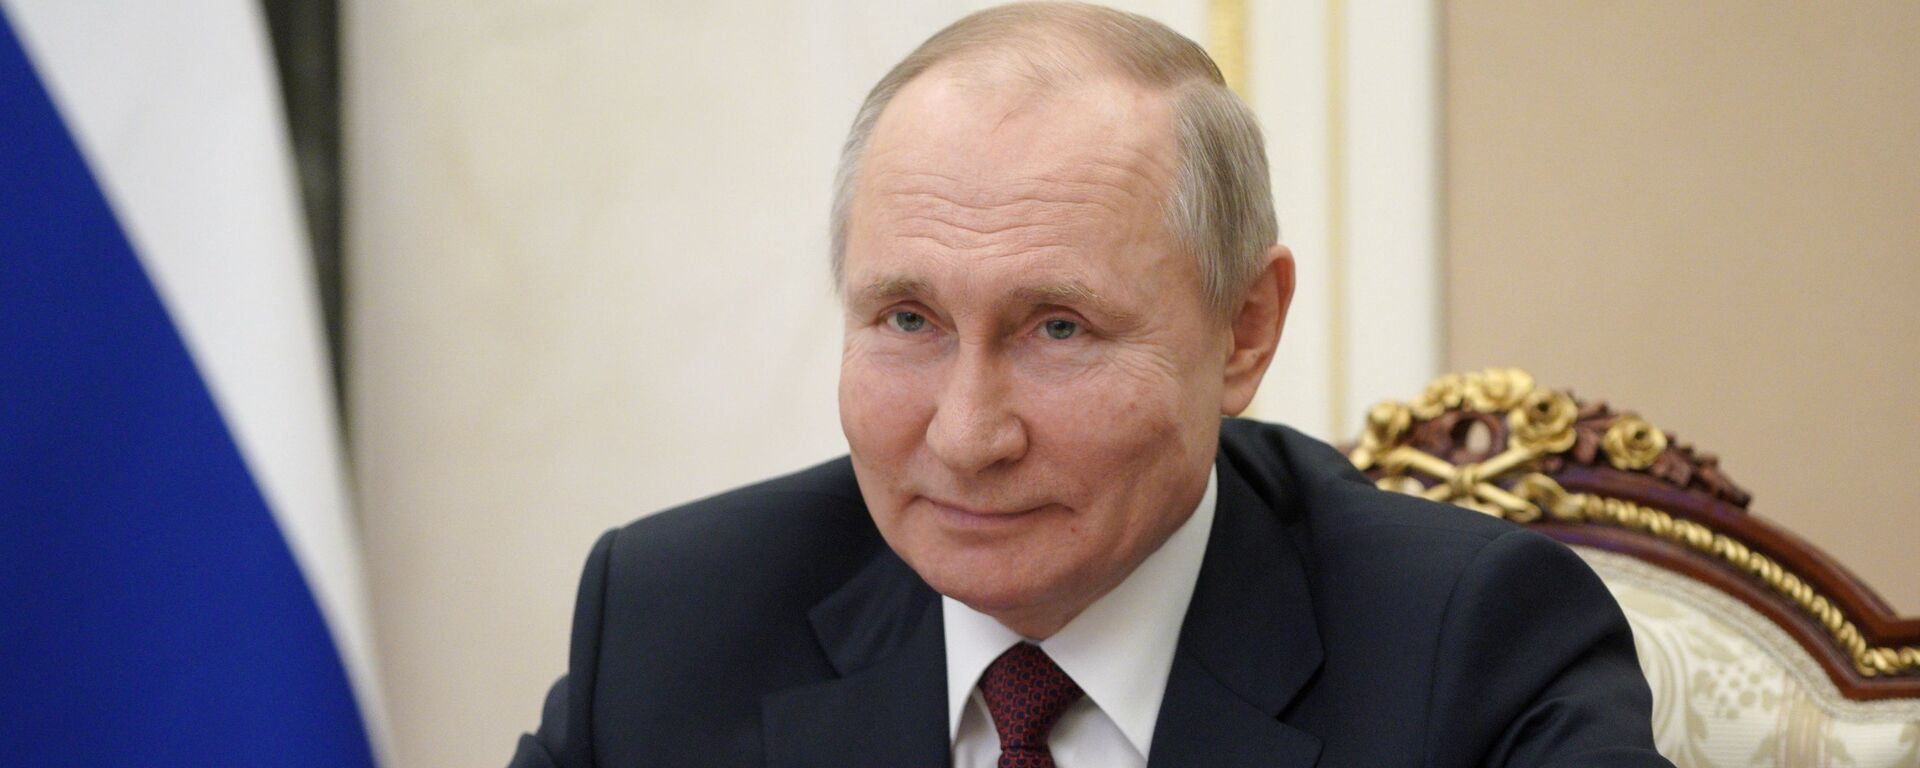 Tổng thống Nga Vladimir Putin - Sputnik Việt Nam, 1920, 26.03.2021